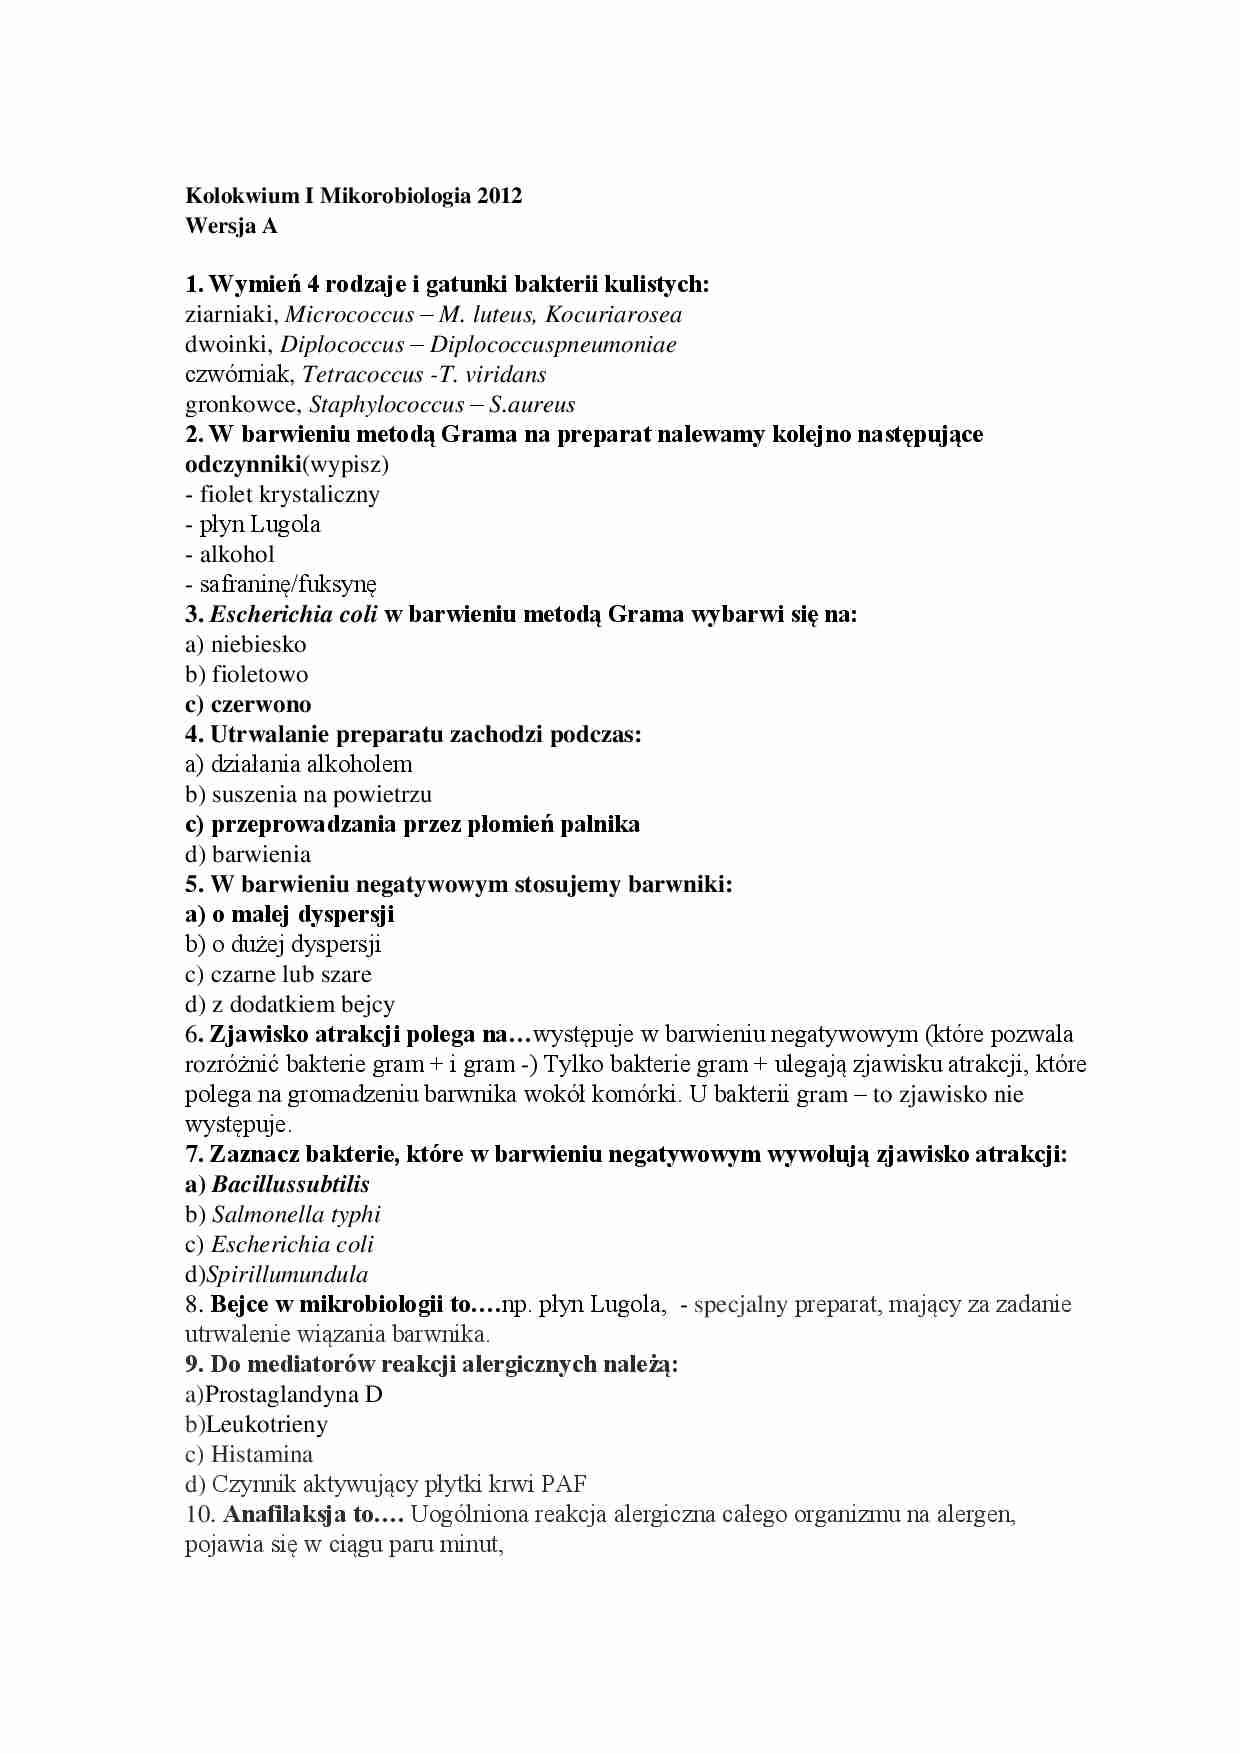 Kolokwium mikrobiologia - strona 1